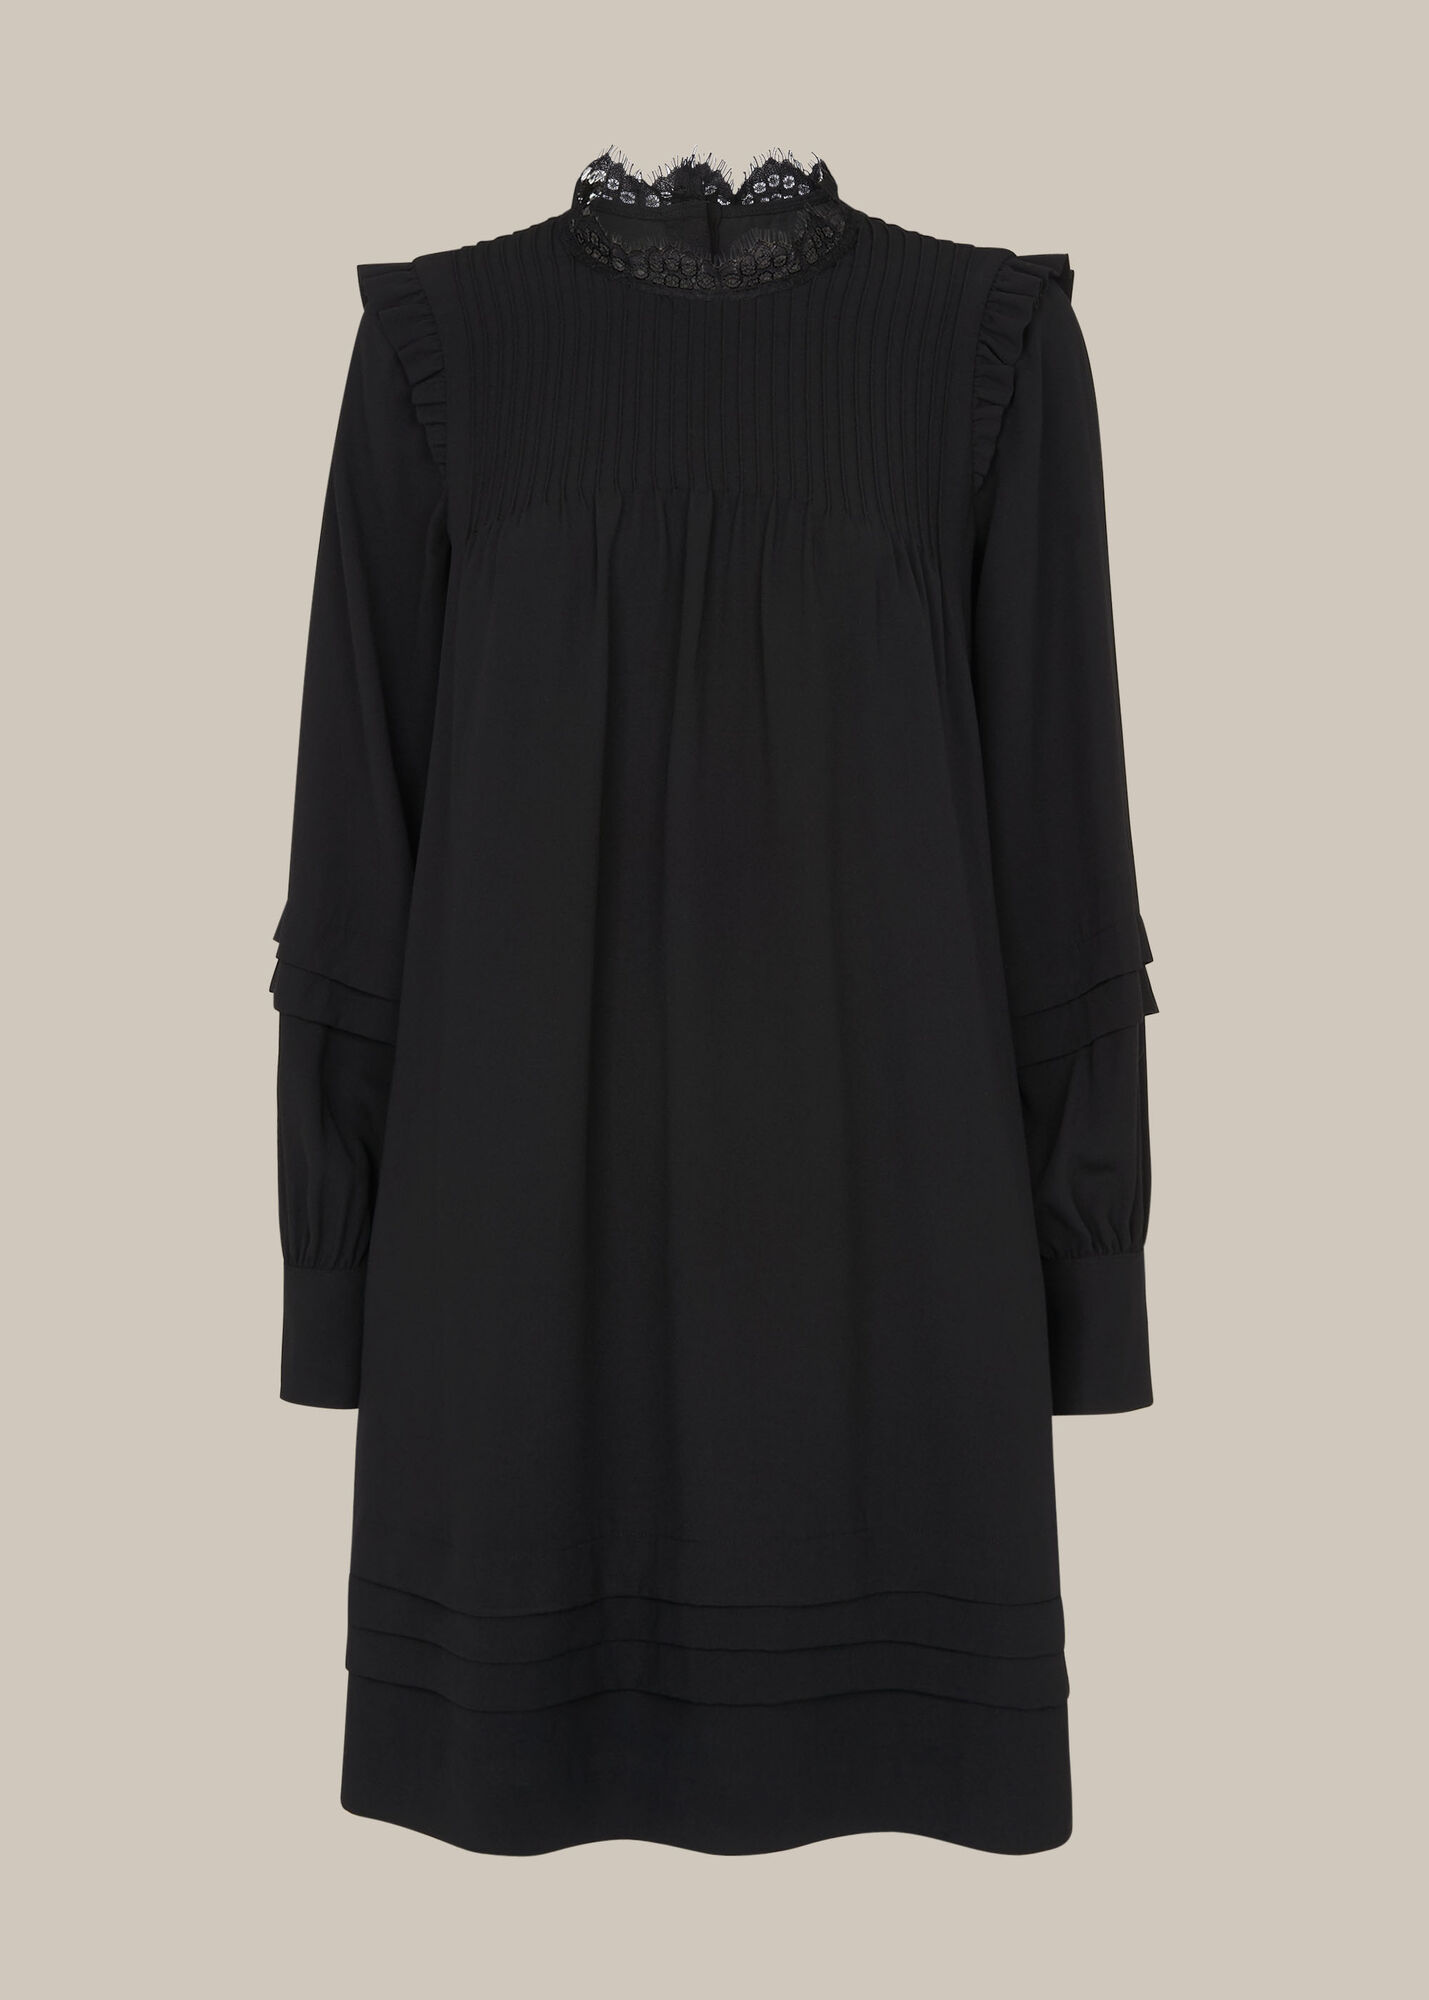 Black Lace Trim Pintuck Dress | WHISTLES